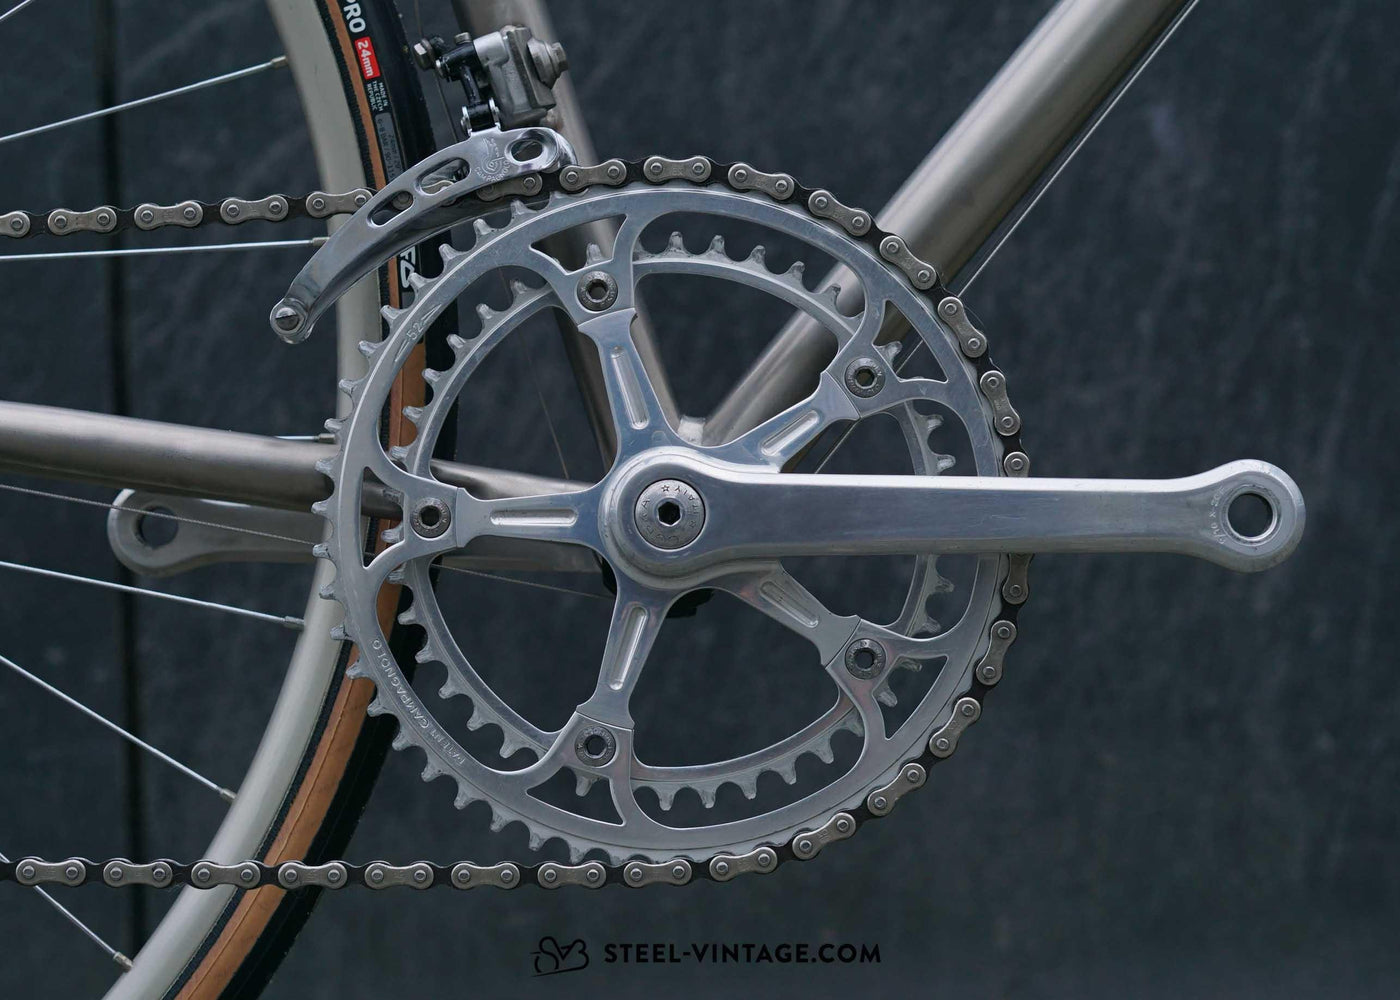 Pinarello Branded Comepre Titanio Racing Bicycle 1980s | Steel Vintage Bikes